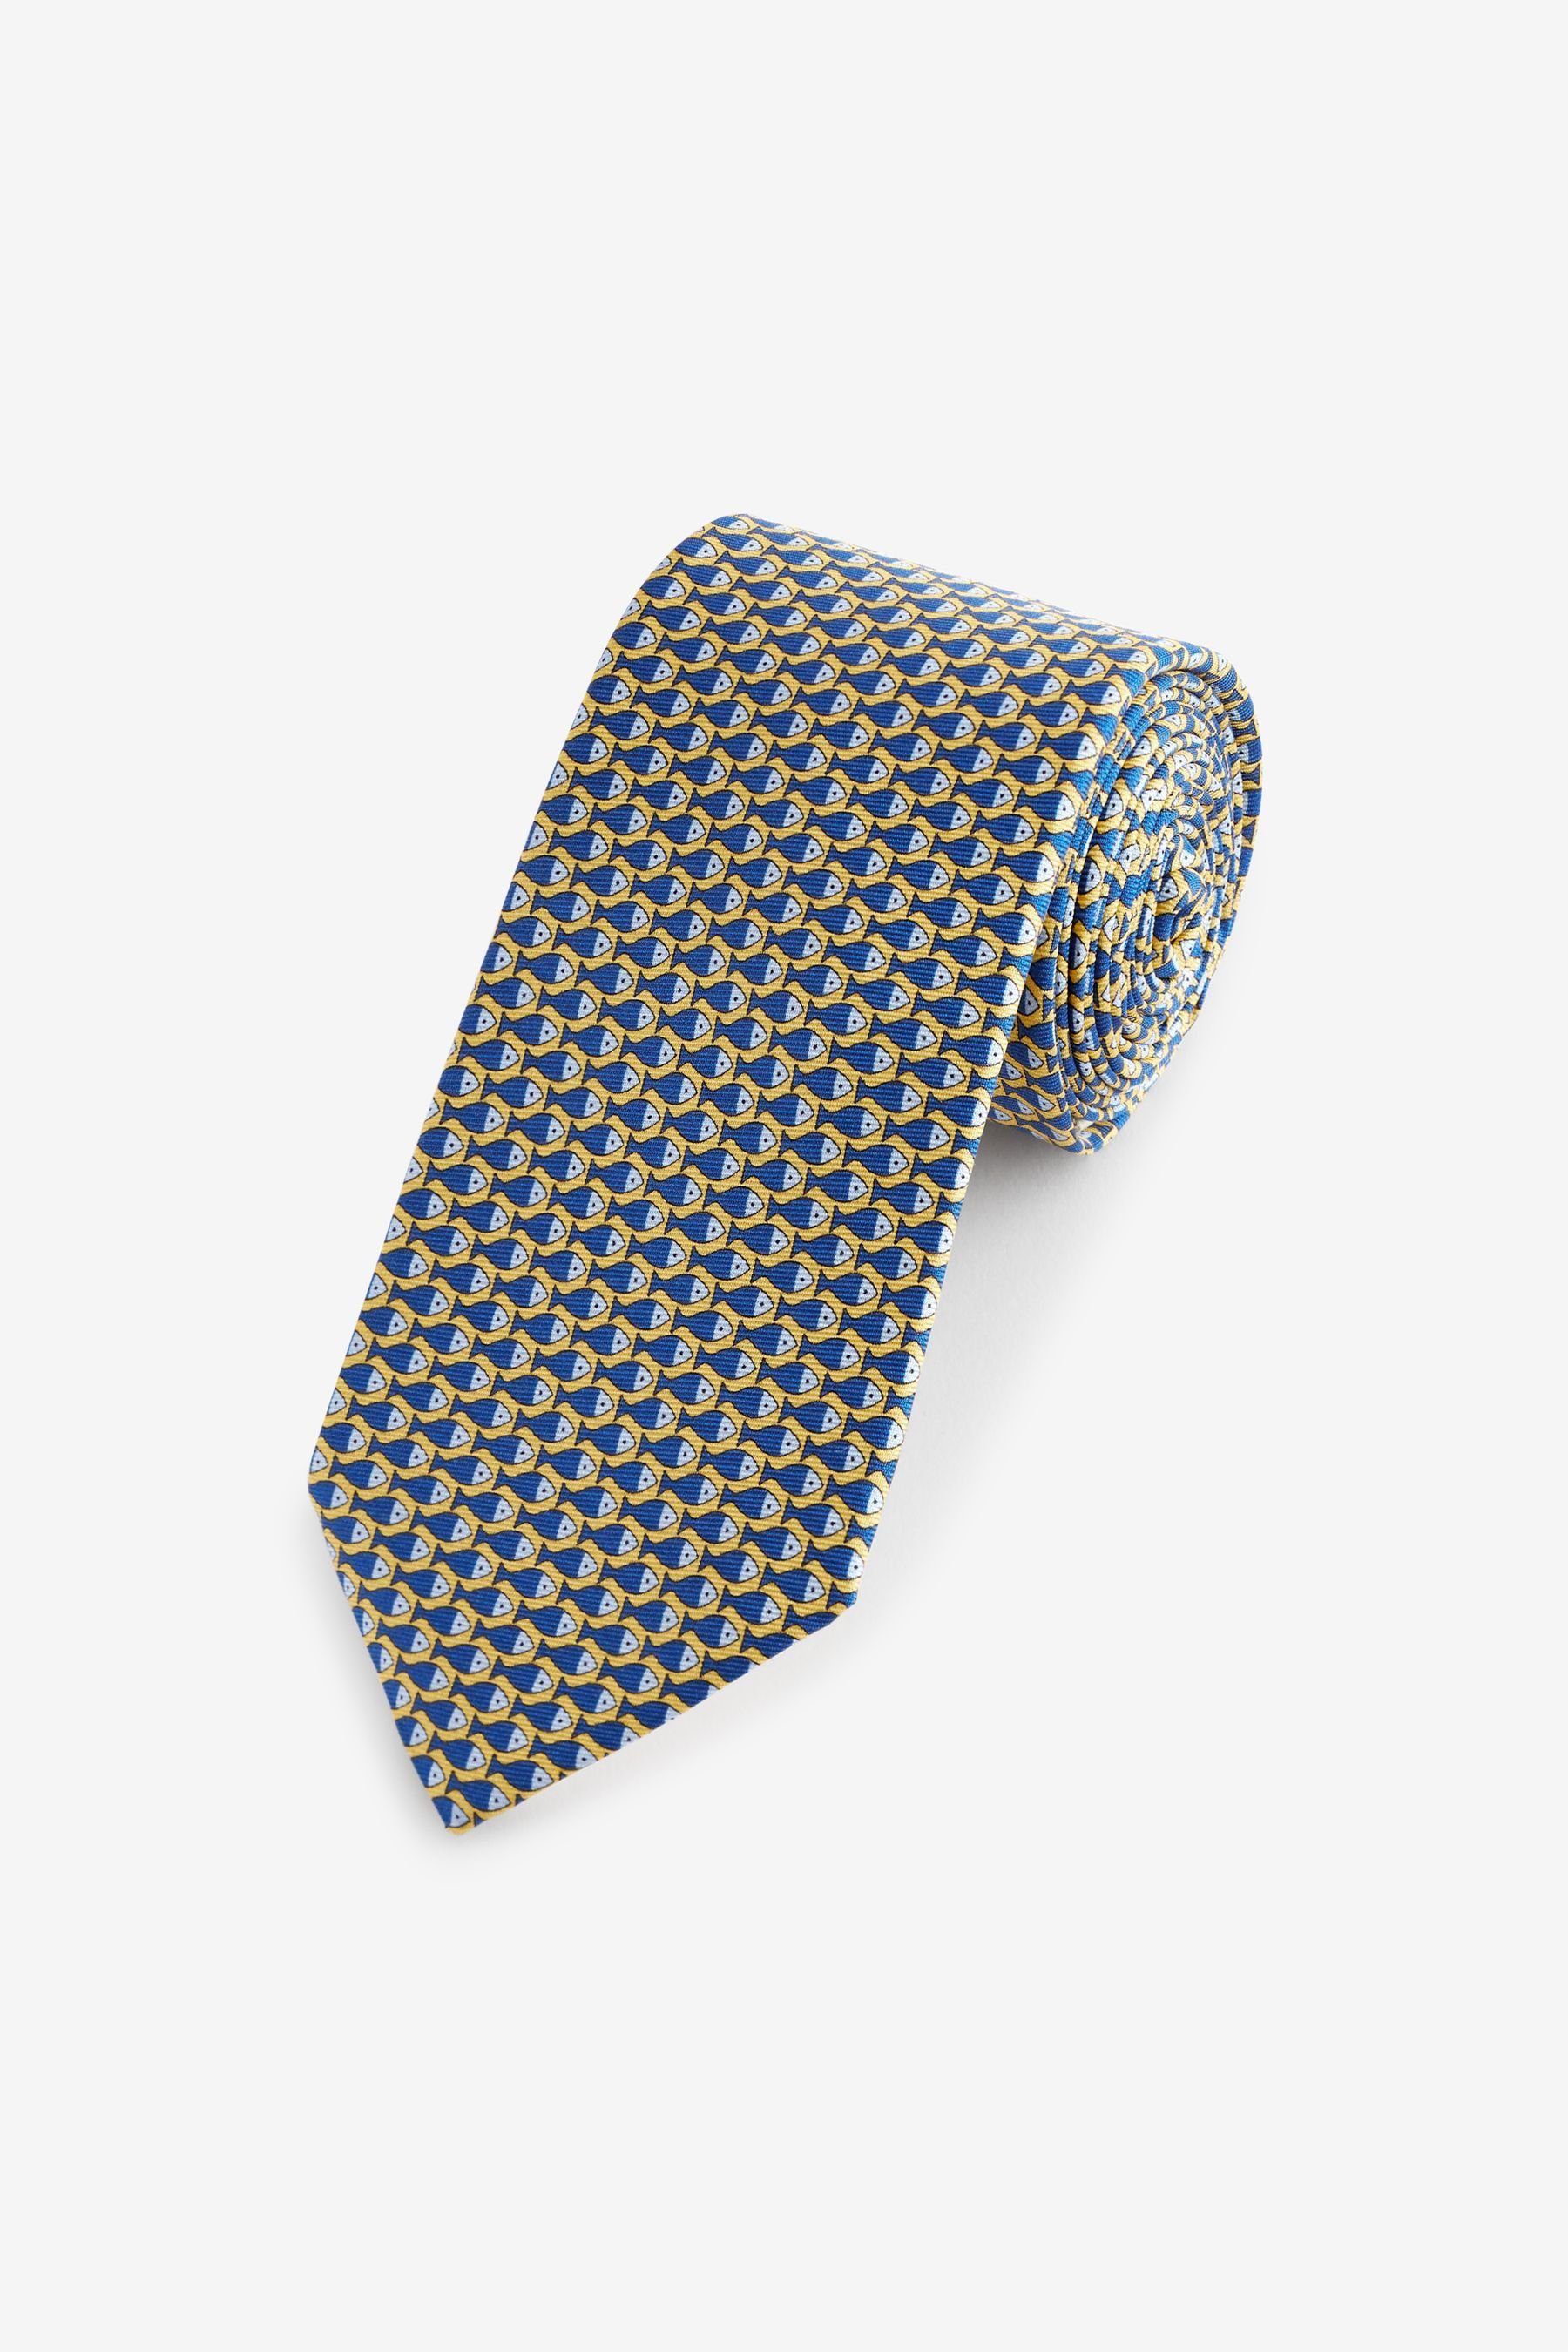 Next Krawatte Signature (1-St) Yellow/Blue Krawatte Made Italy Auffällige in Fish